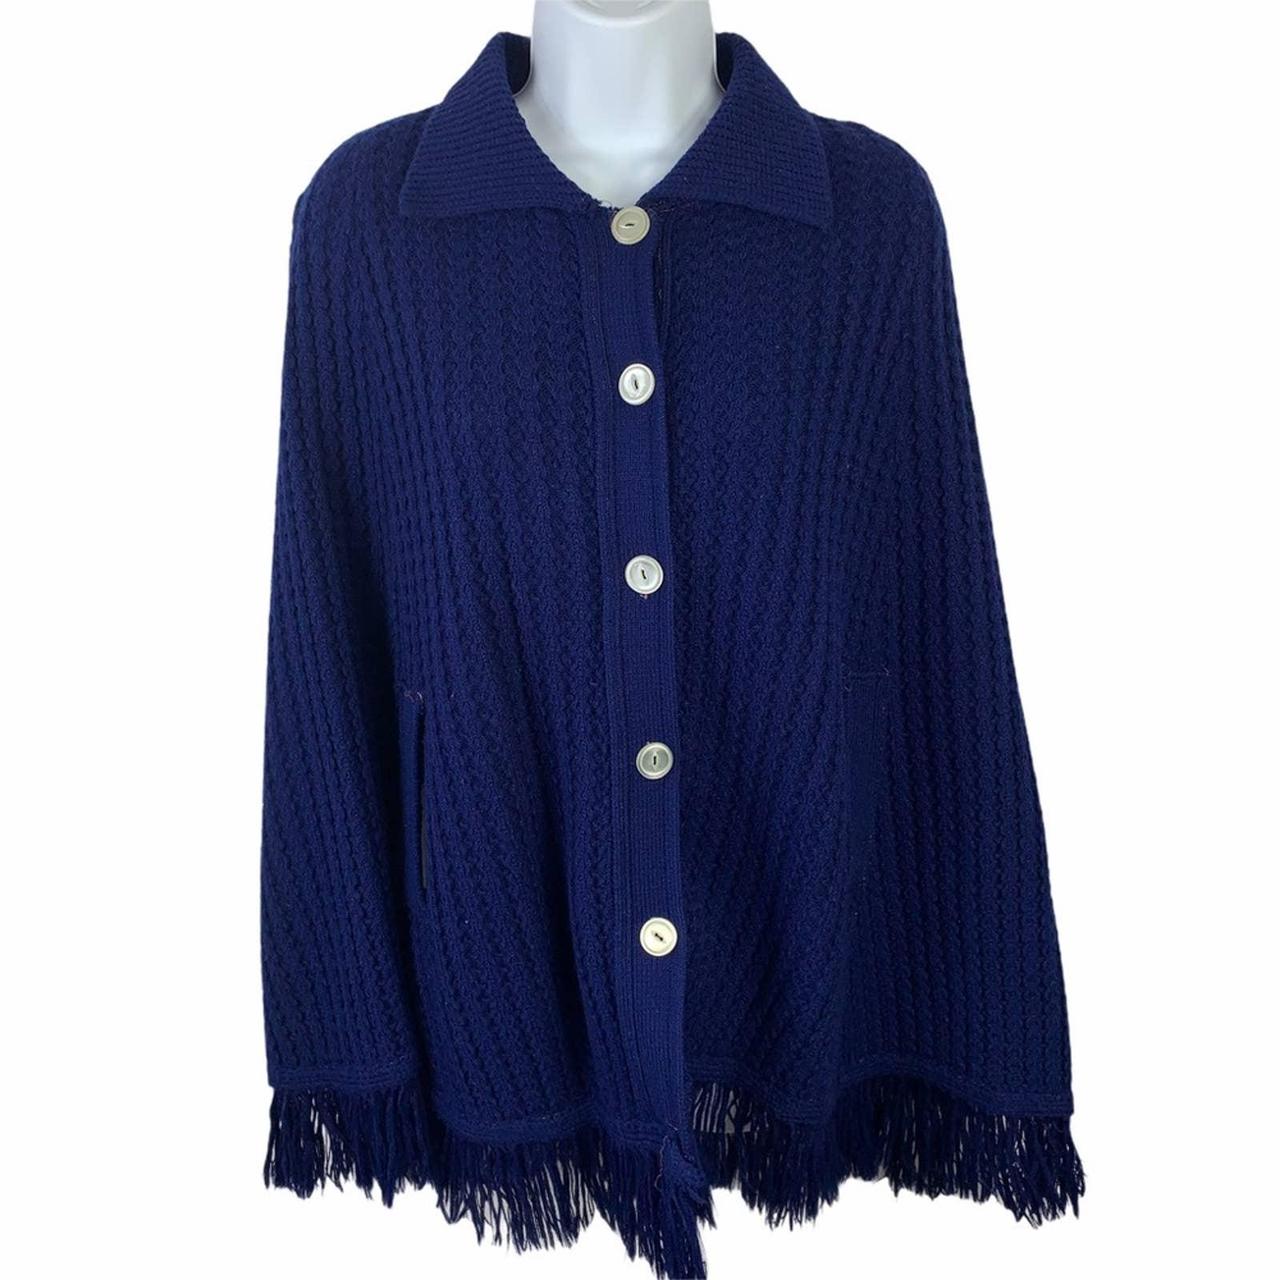 Vintage Jolie 60s/70s Knitwear Button Front... - Depop